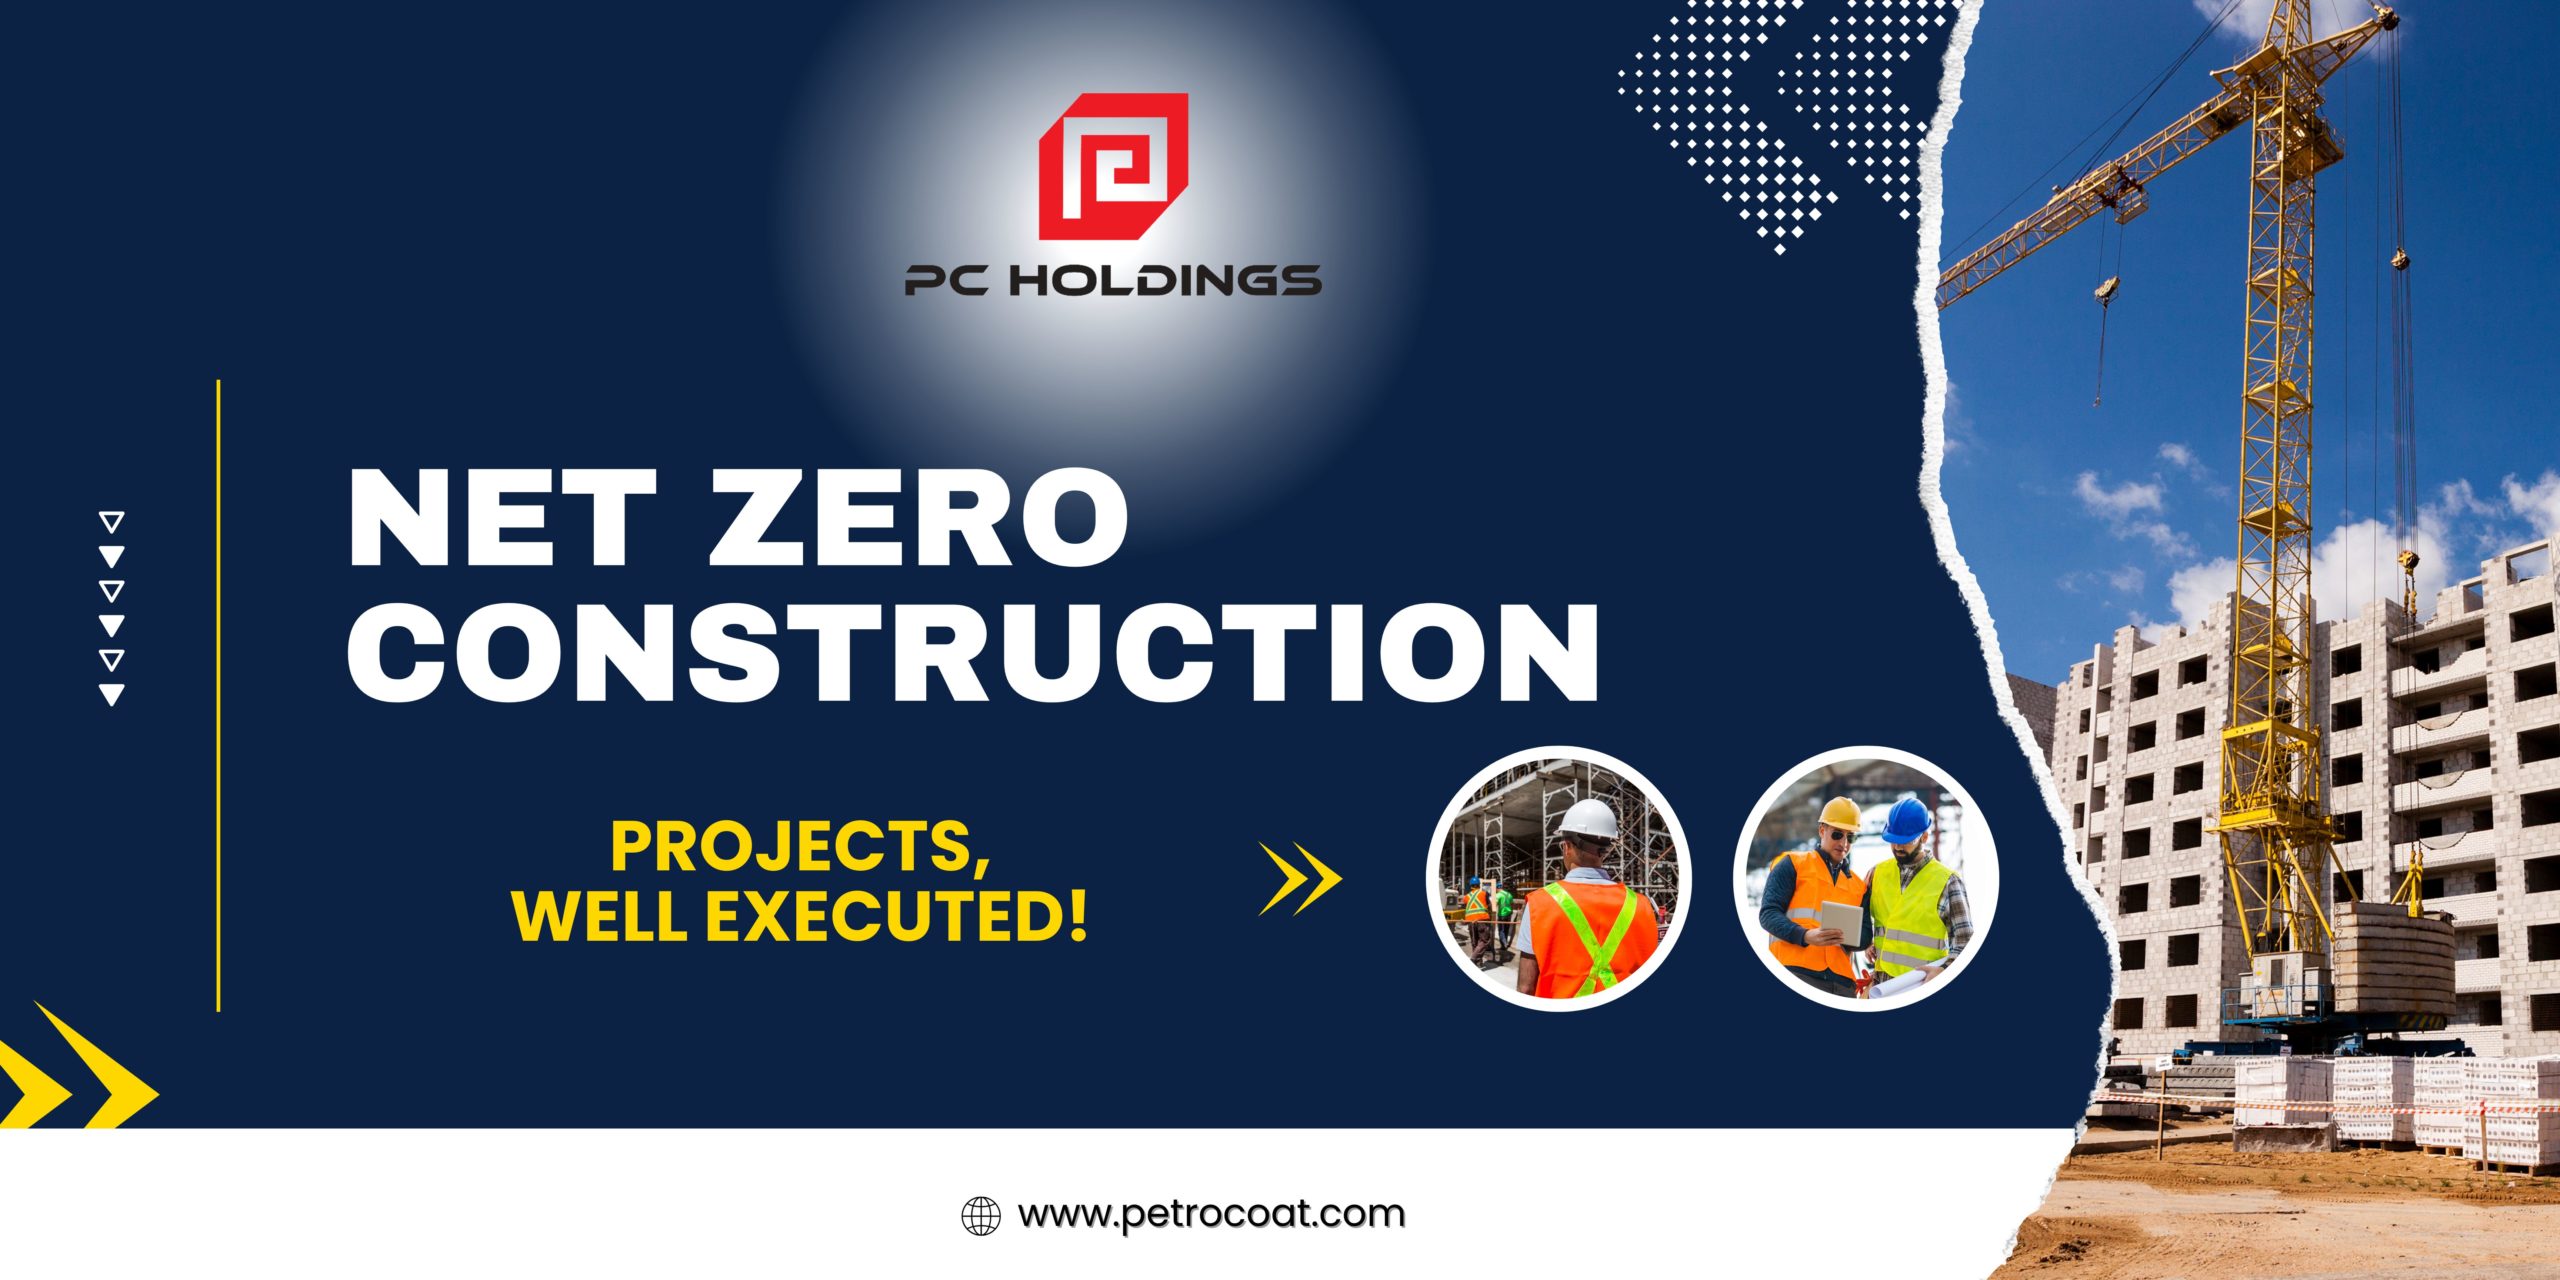 Net Zero Construction - PC Holdings